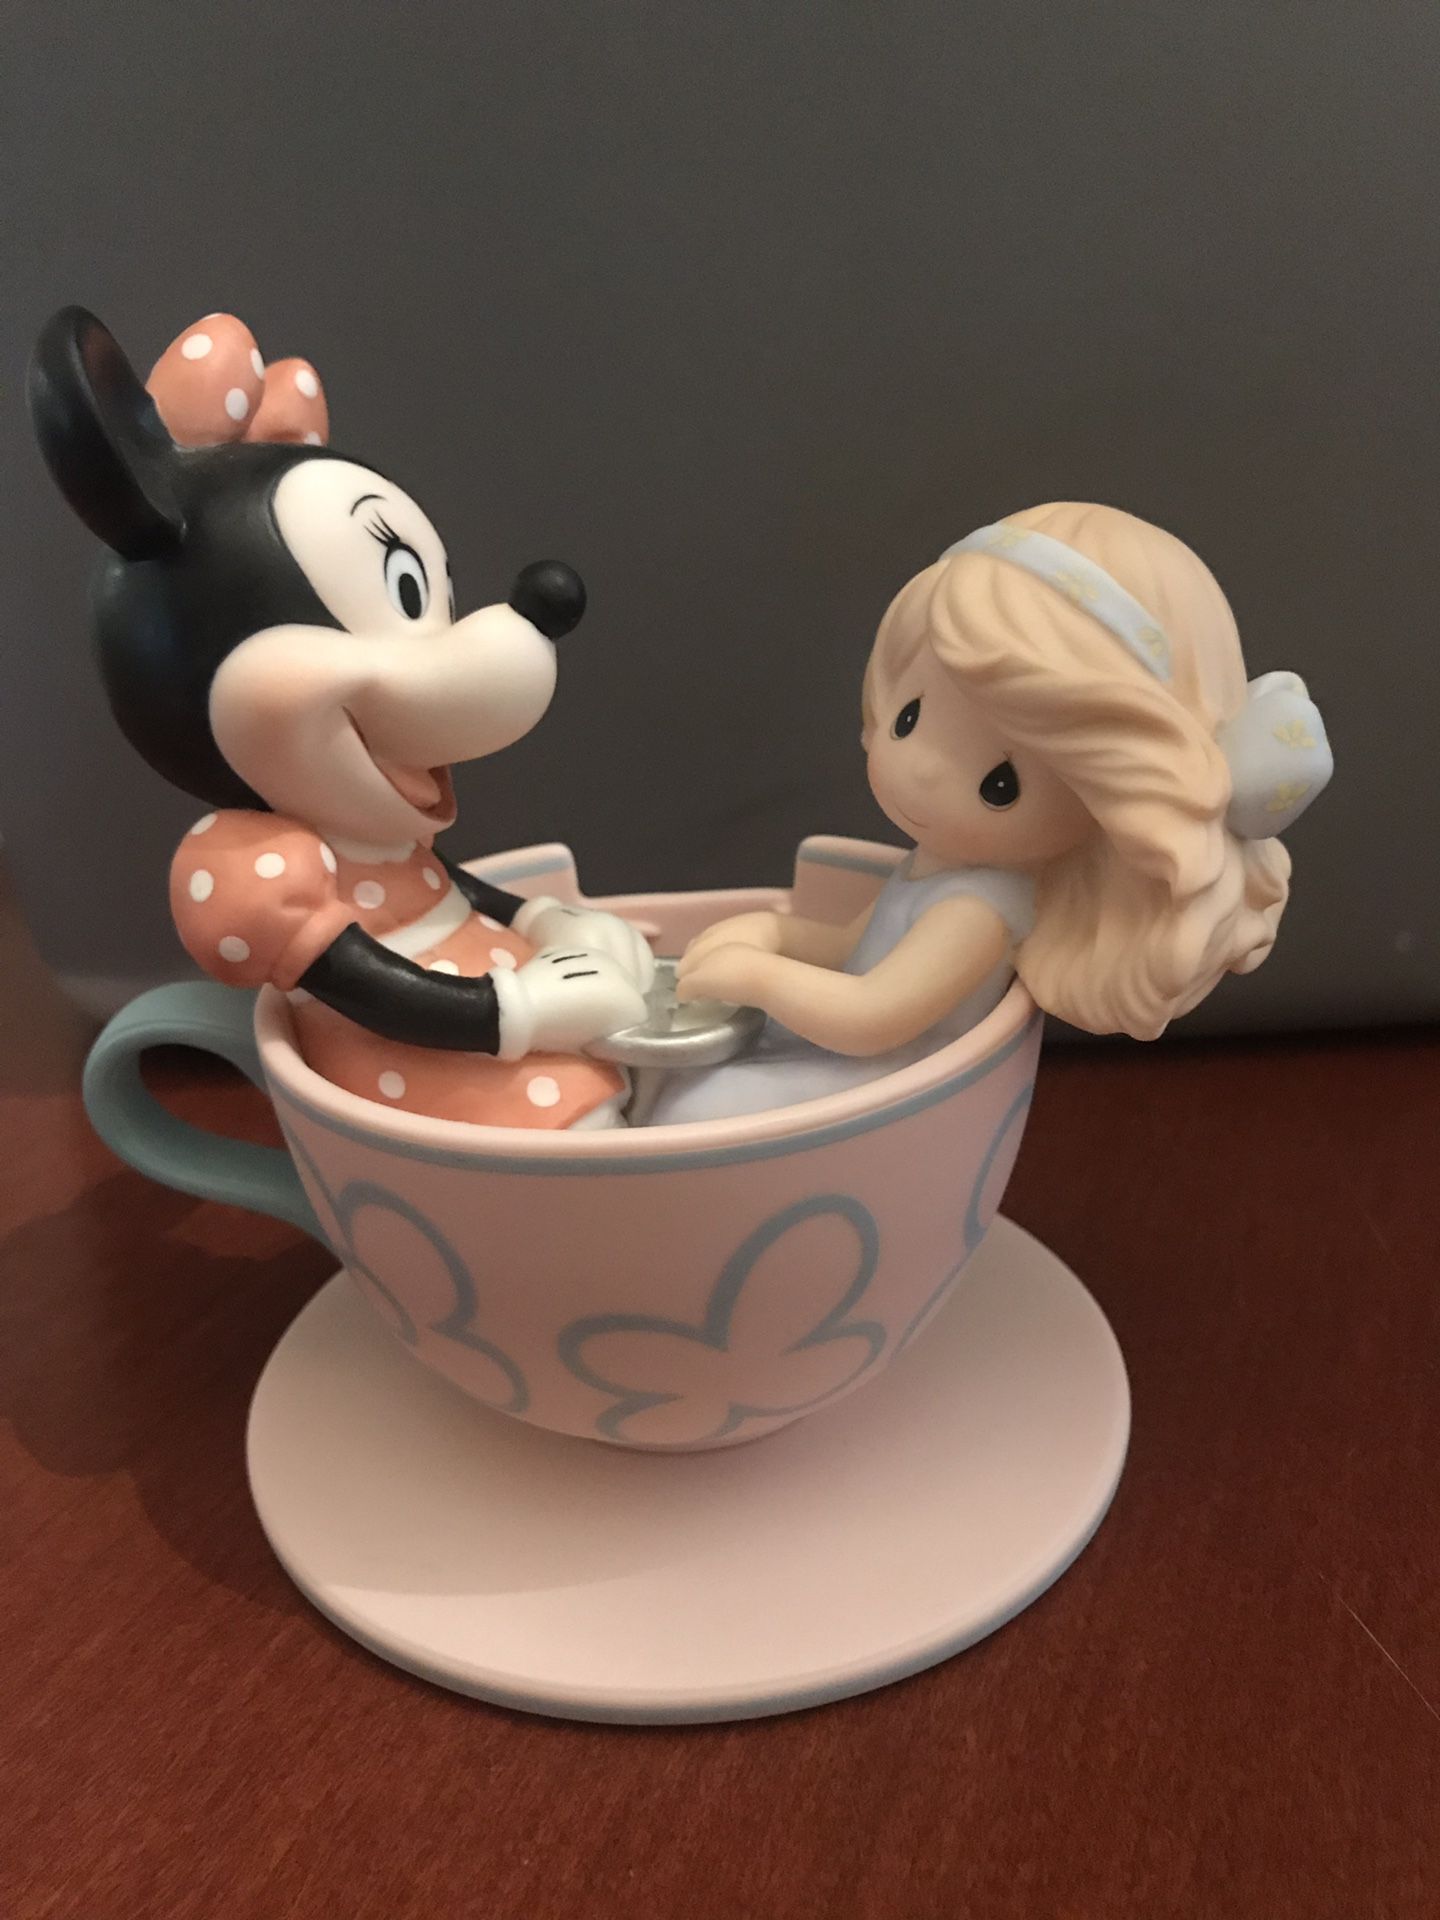 Disney Precious Moments “You are my cup of tea” figurine w/original box